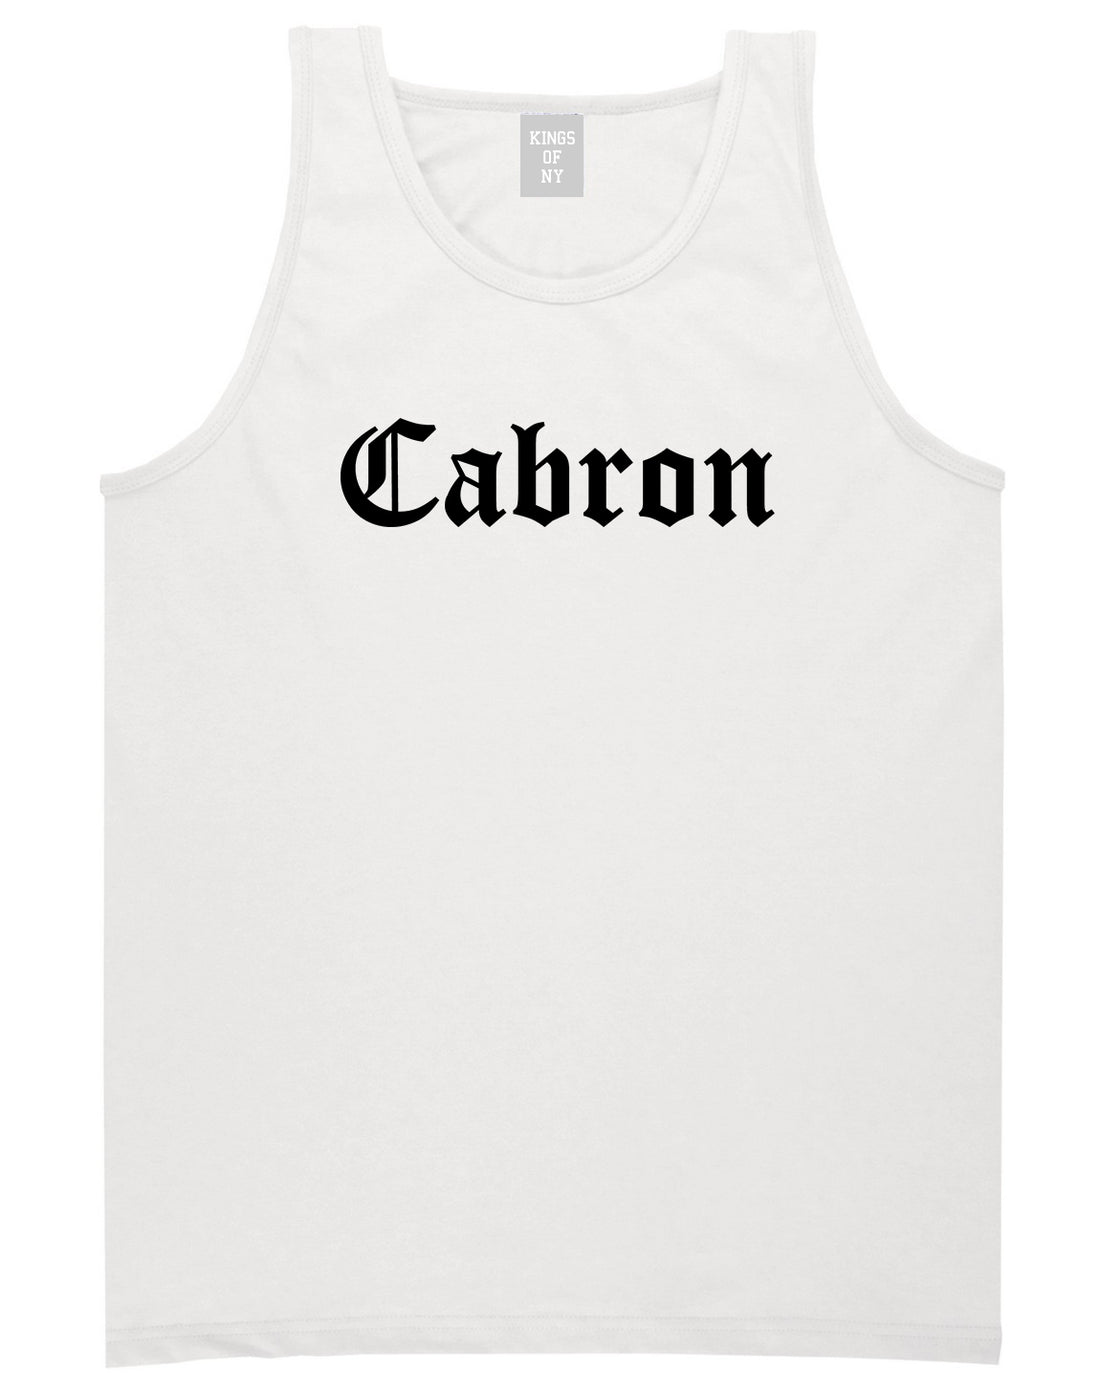 Cabron Spanish Mens Tank Top Shirt White